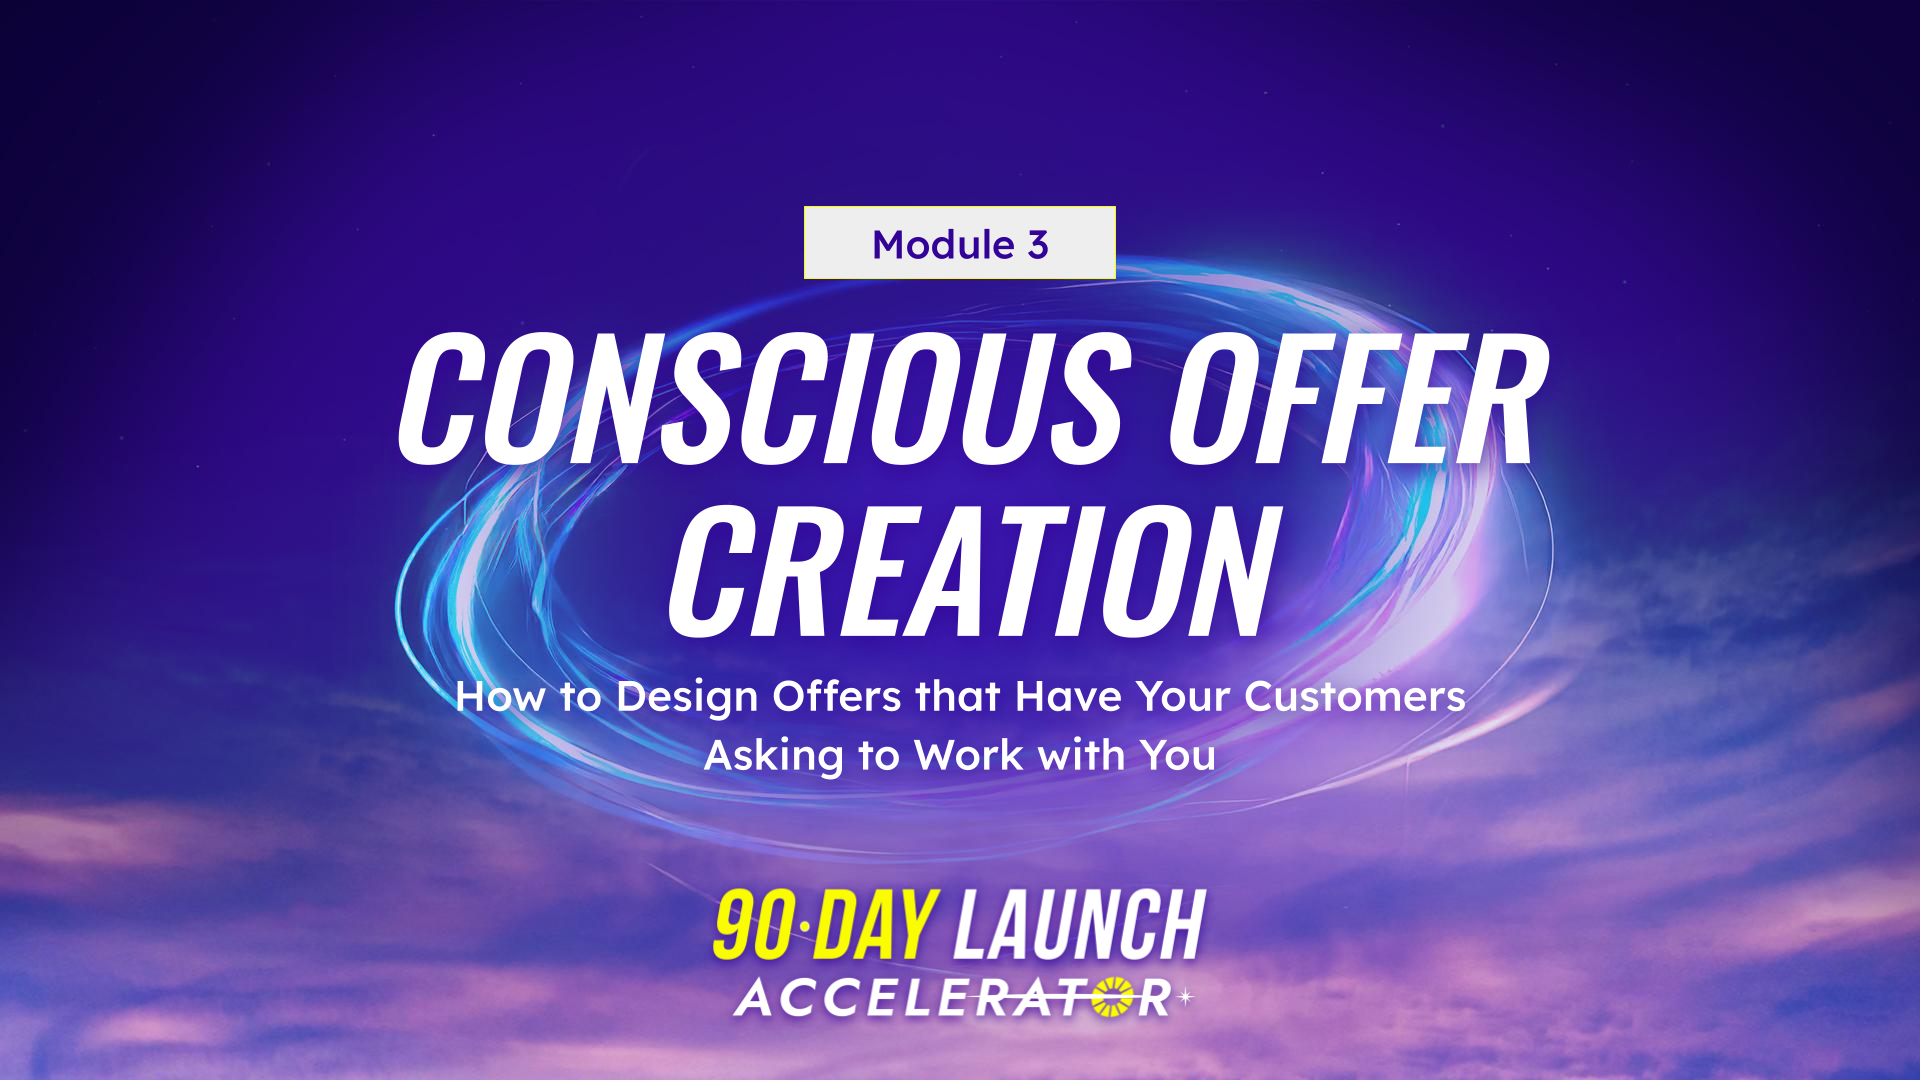 Module 3: Conscious Offer Creation